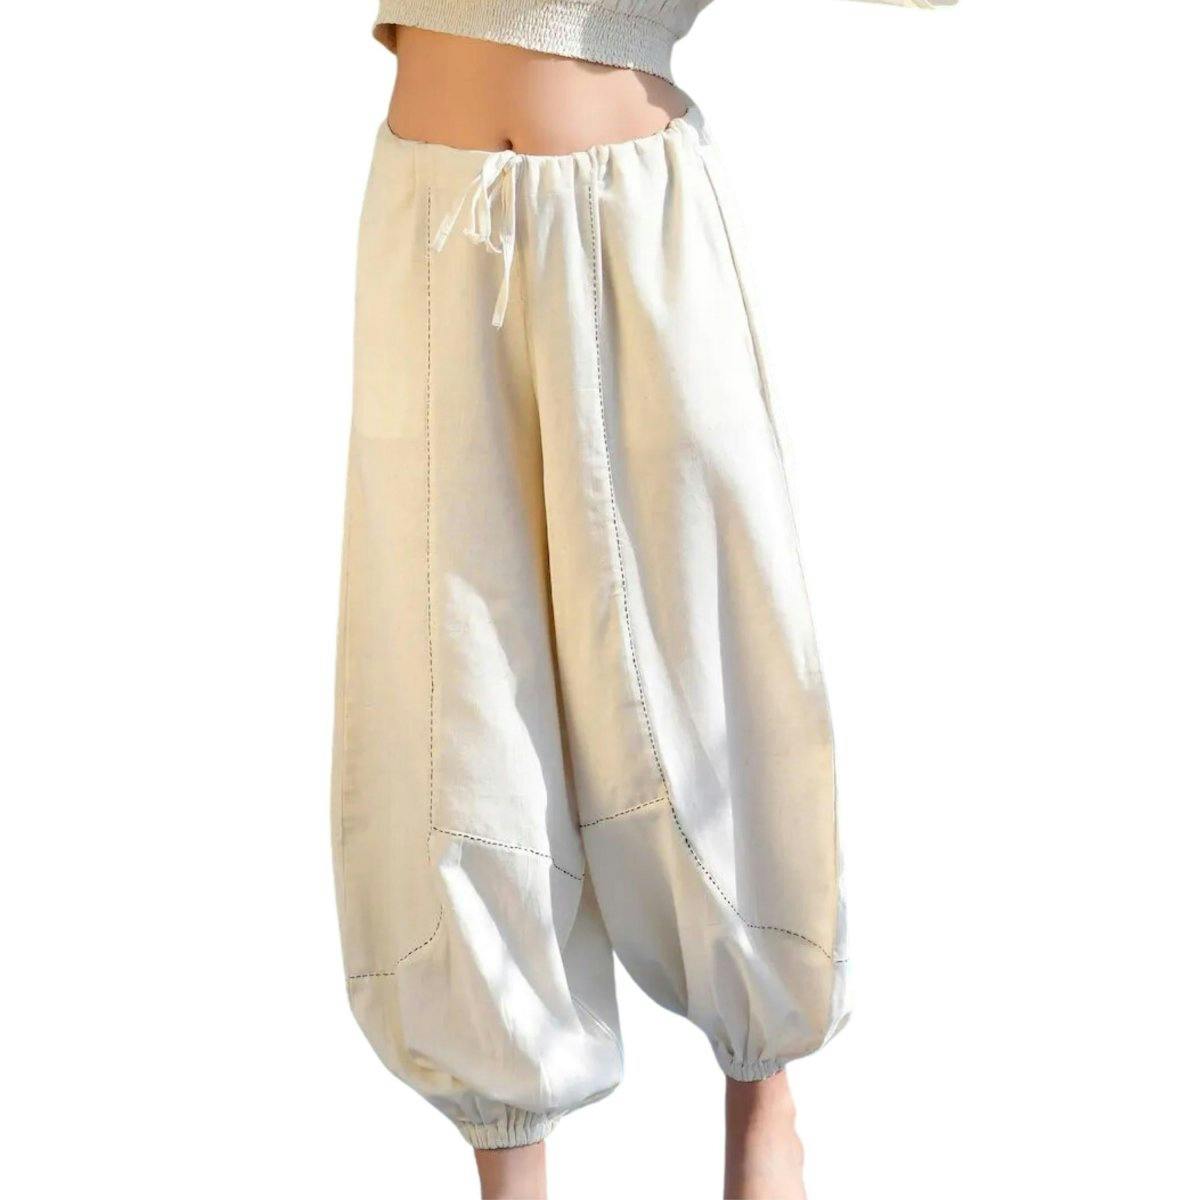 Buy Meditation Yoga Clothes Indian Cotton Loose Fit Women's Salwar Kameez  XL at